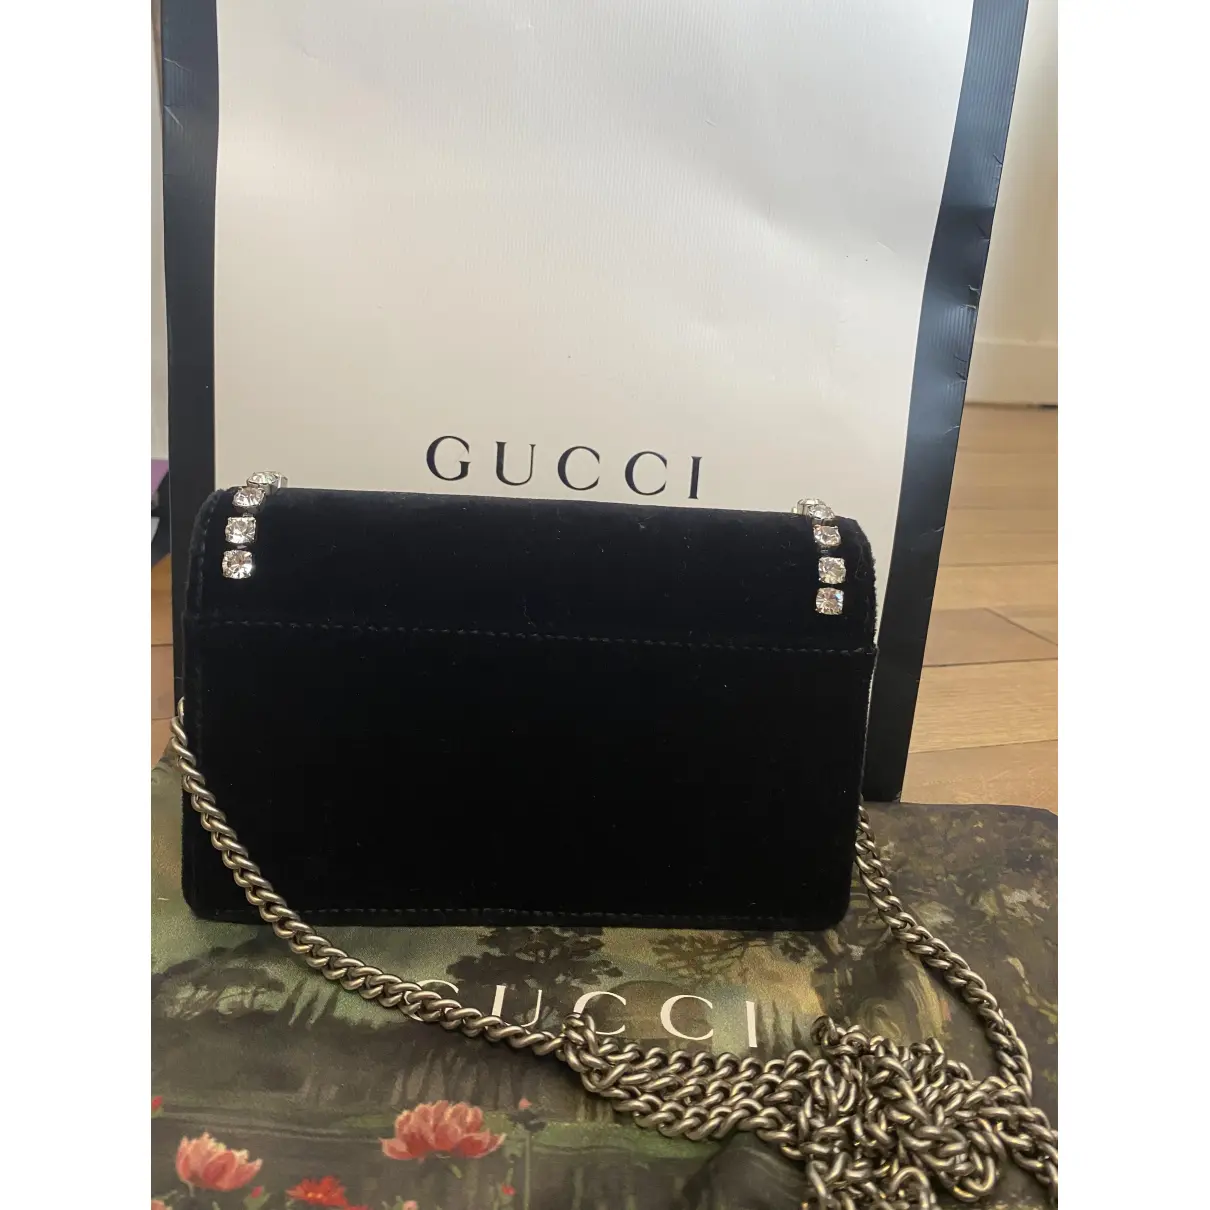 Buy Gucci Dionysus Super Mini velvet crossbody bag online